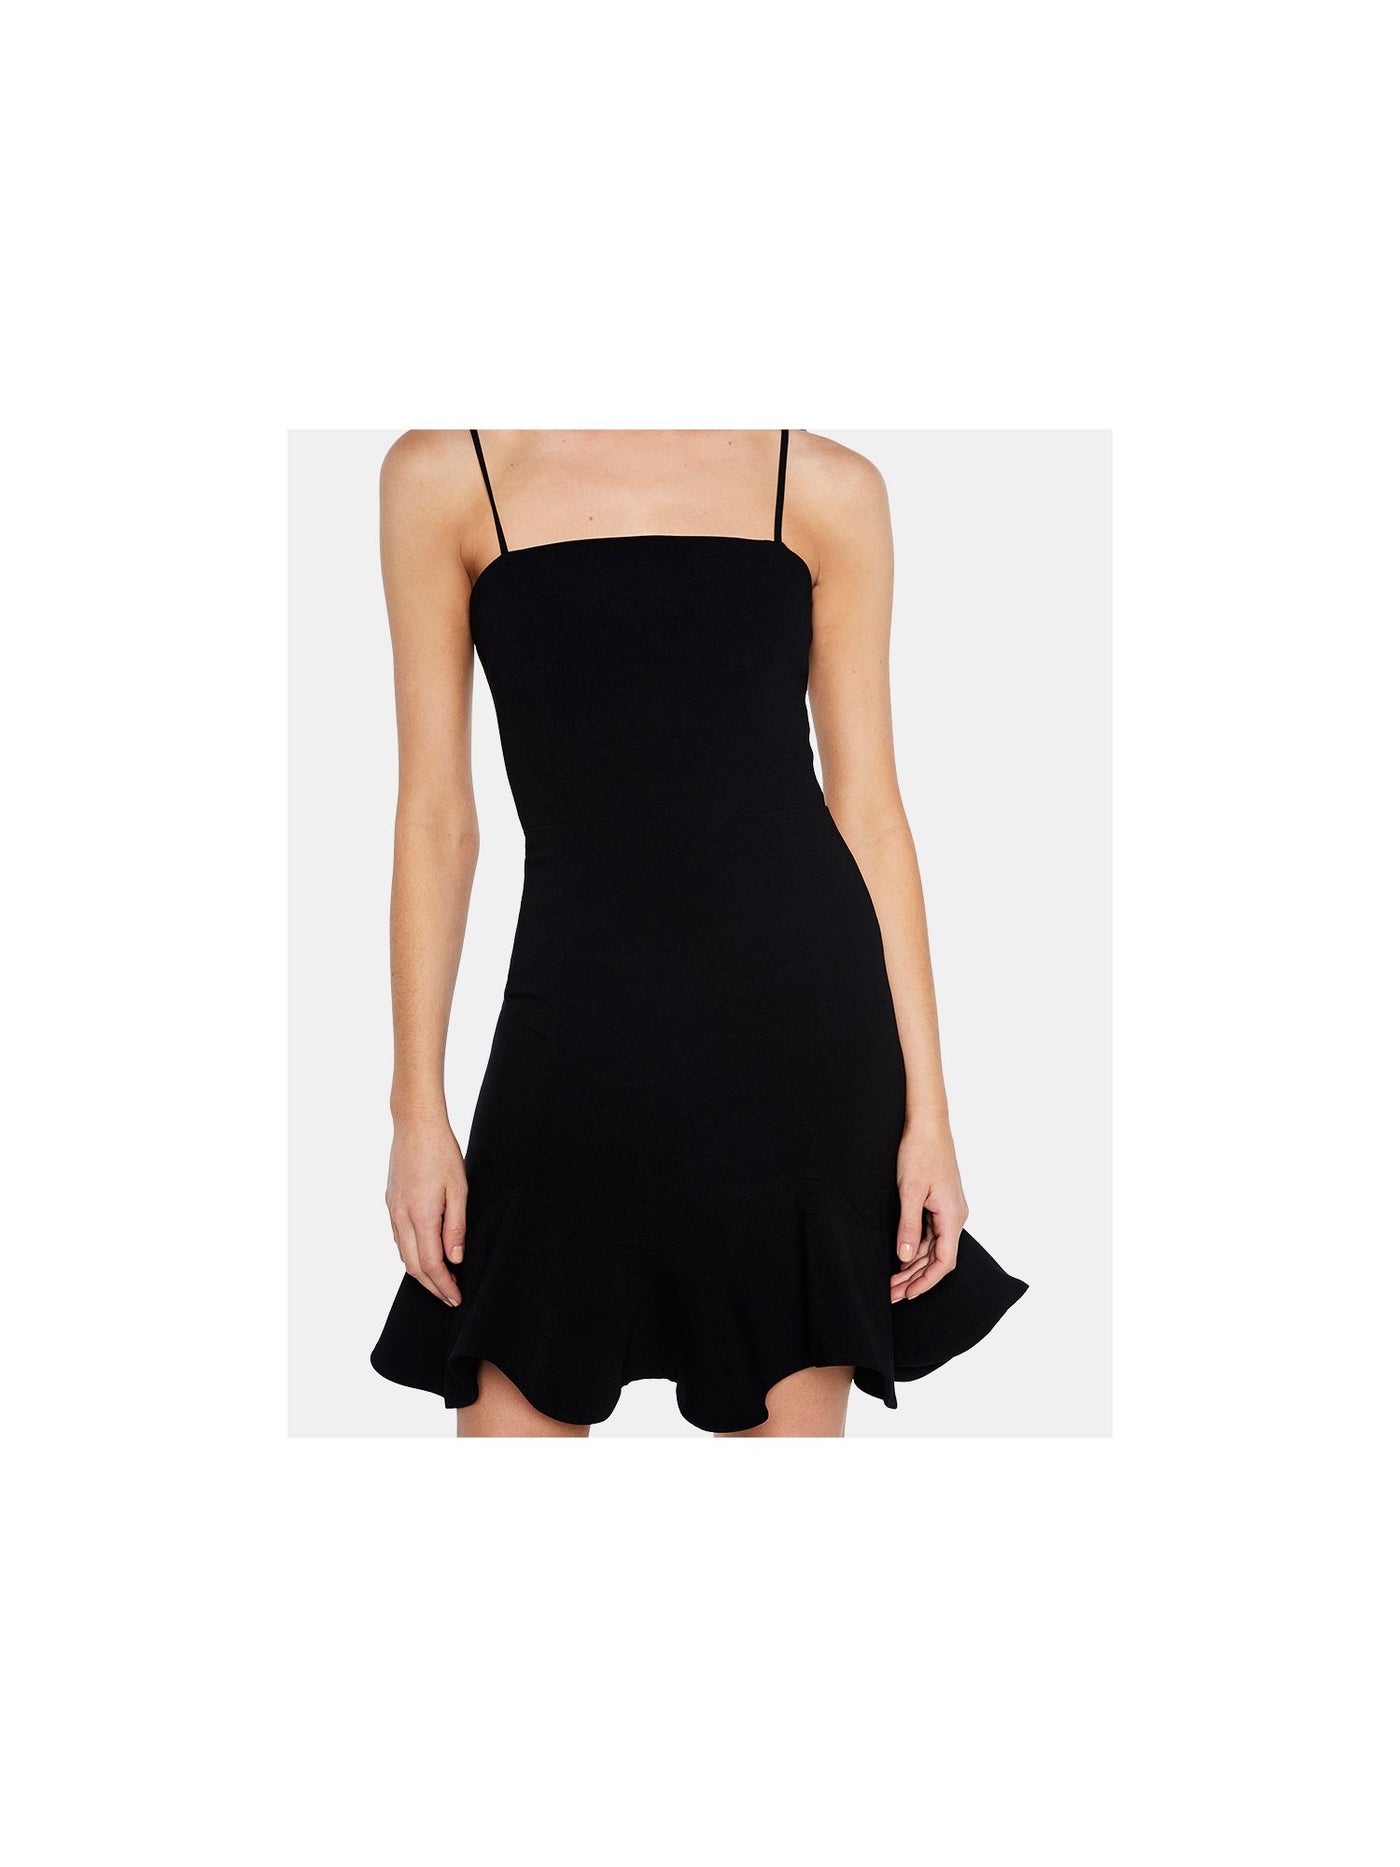 BARDOT Womens Black Spaghetti Strap Square Neck Above The Knee Party Fit + Flare Dress 10\L